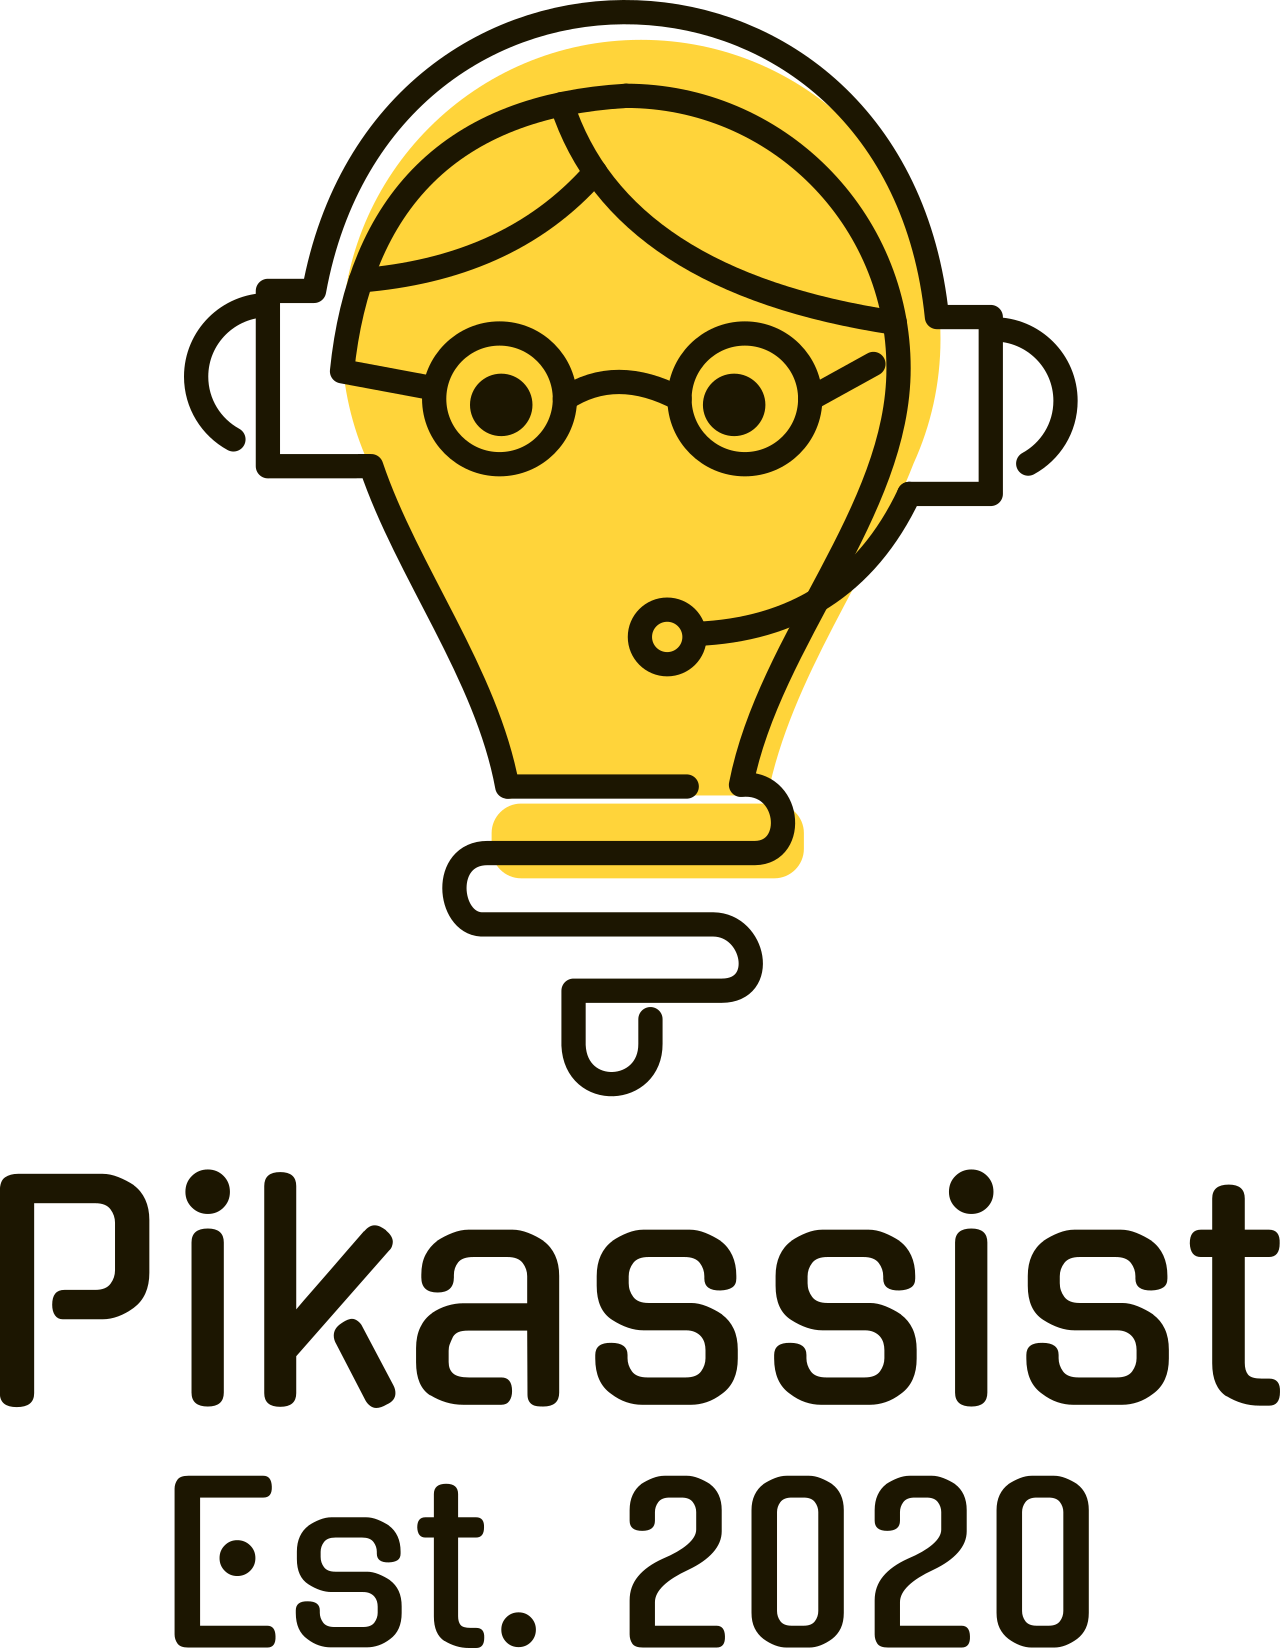 Pikassist's web page